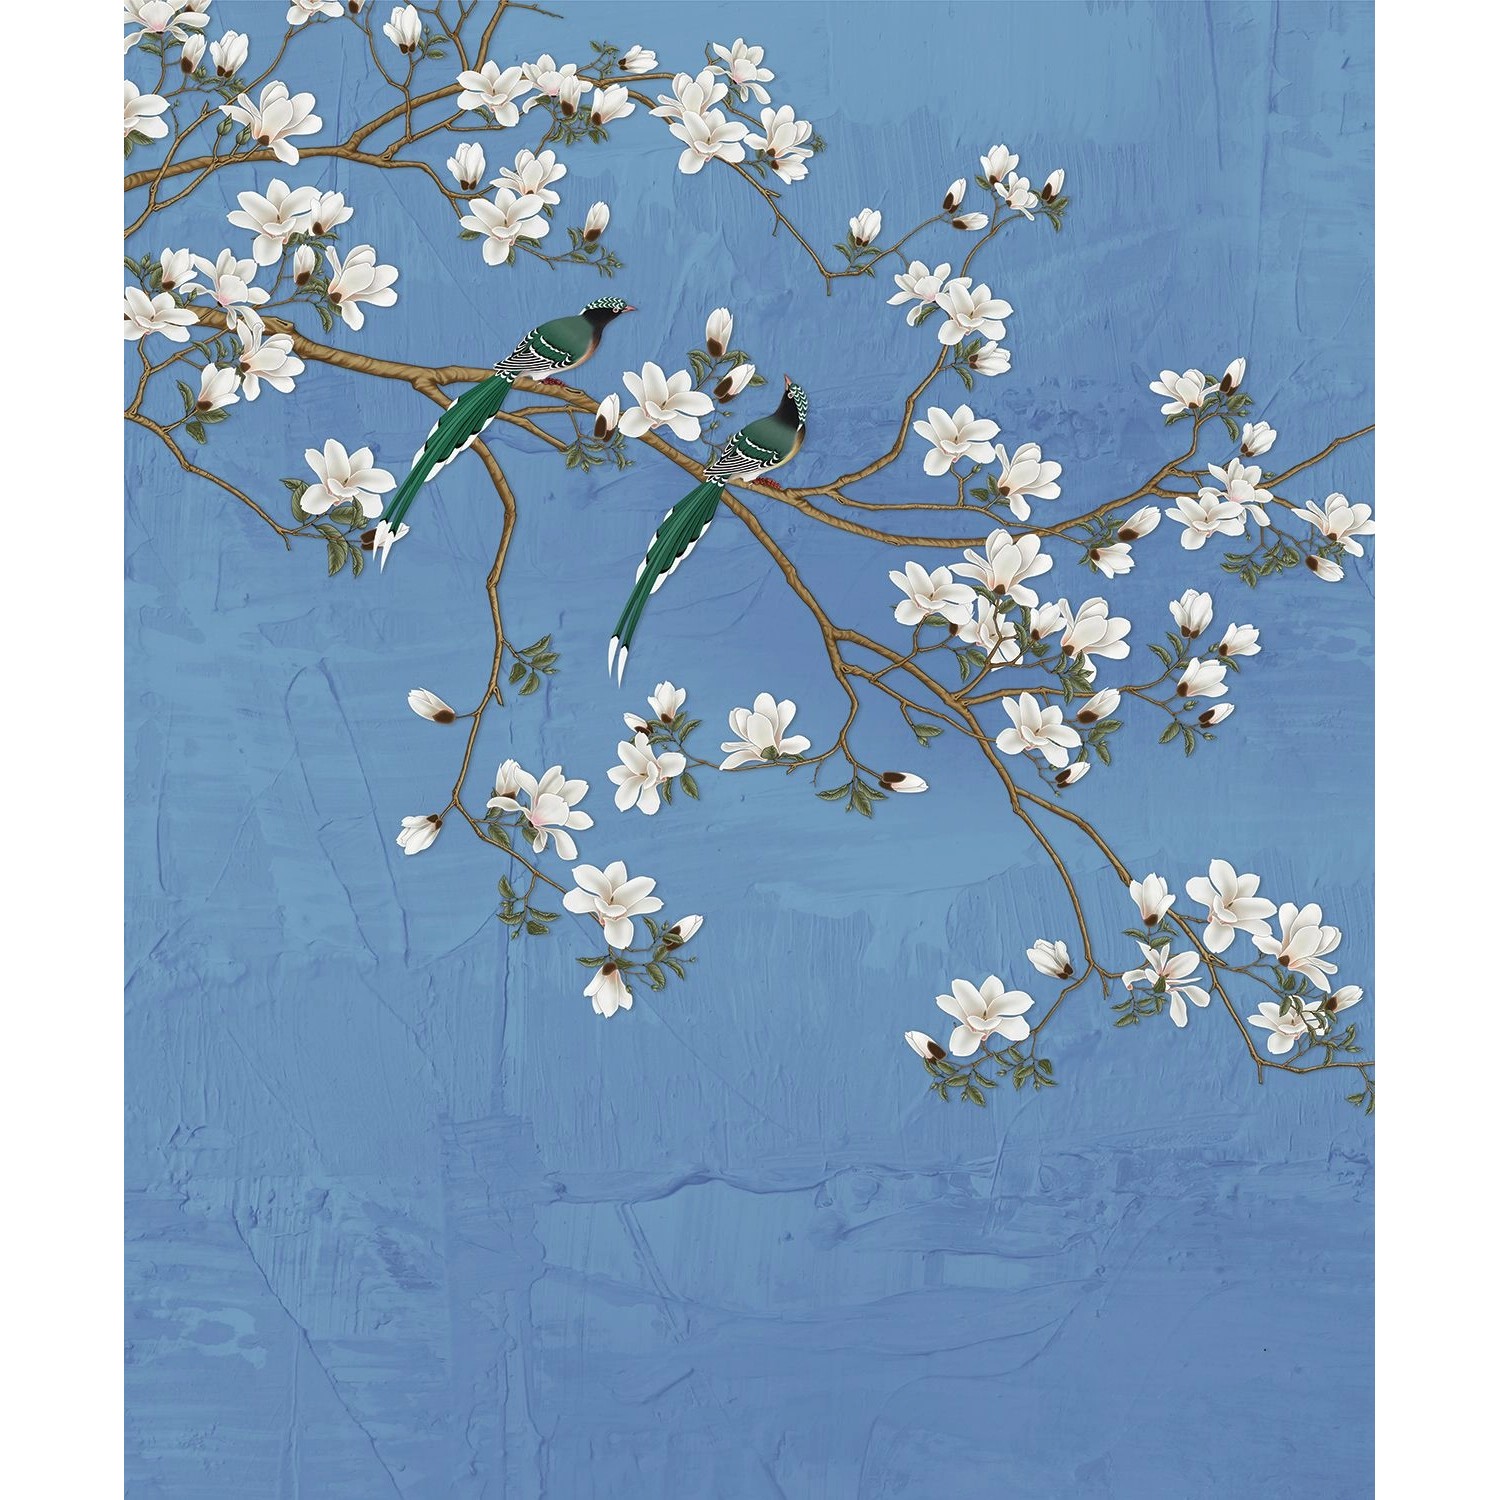 Sanders & Sanders Fototapete Blütenzweige Graublau 2,25 x 2,7 m 601196 günstig online kaufen